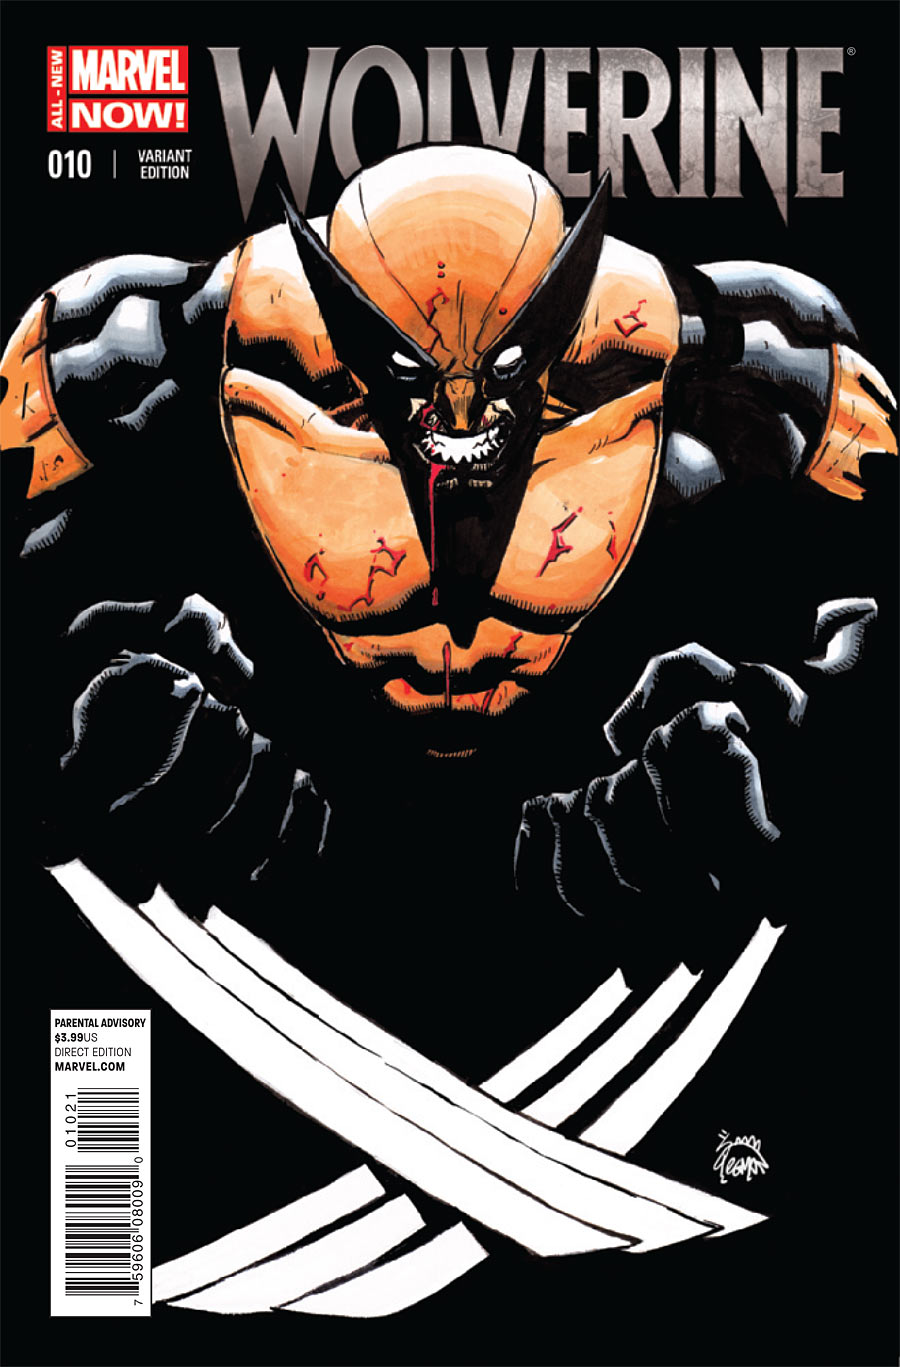 Wolverine #10 variant